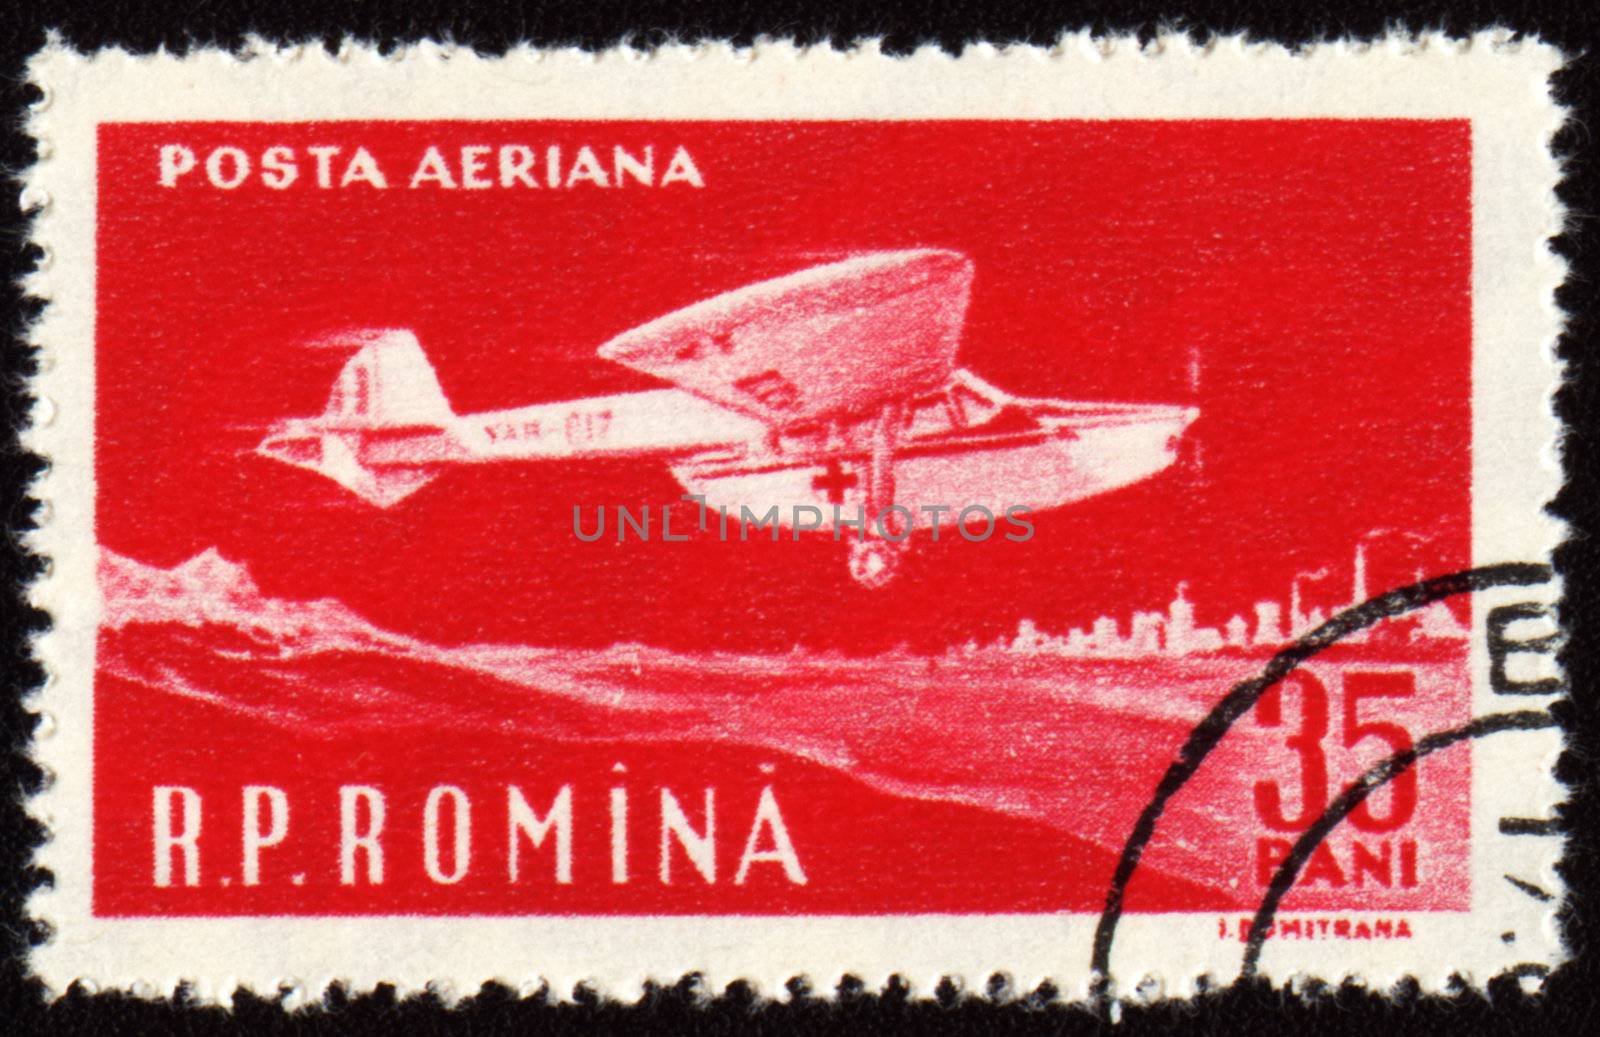 ROMANIA - CIRCA 1960: A stamp printed in Romania shows flying vintage ambulance plane, circa 1960